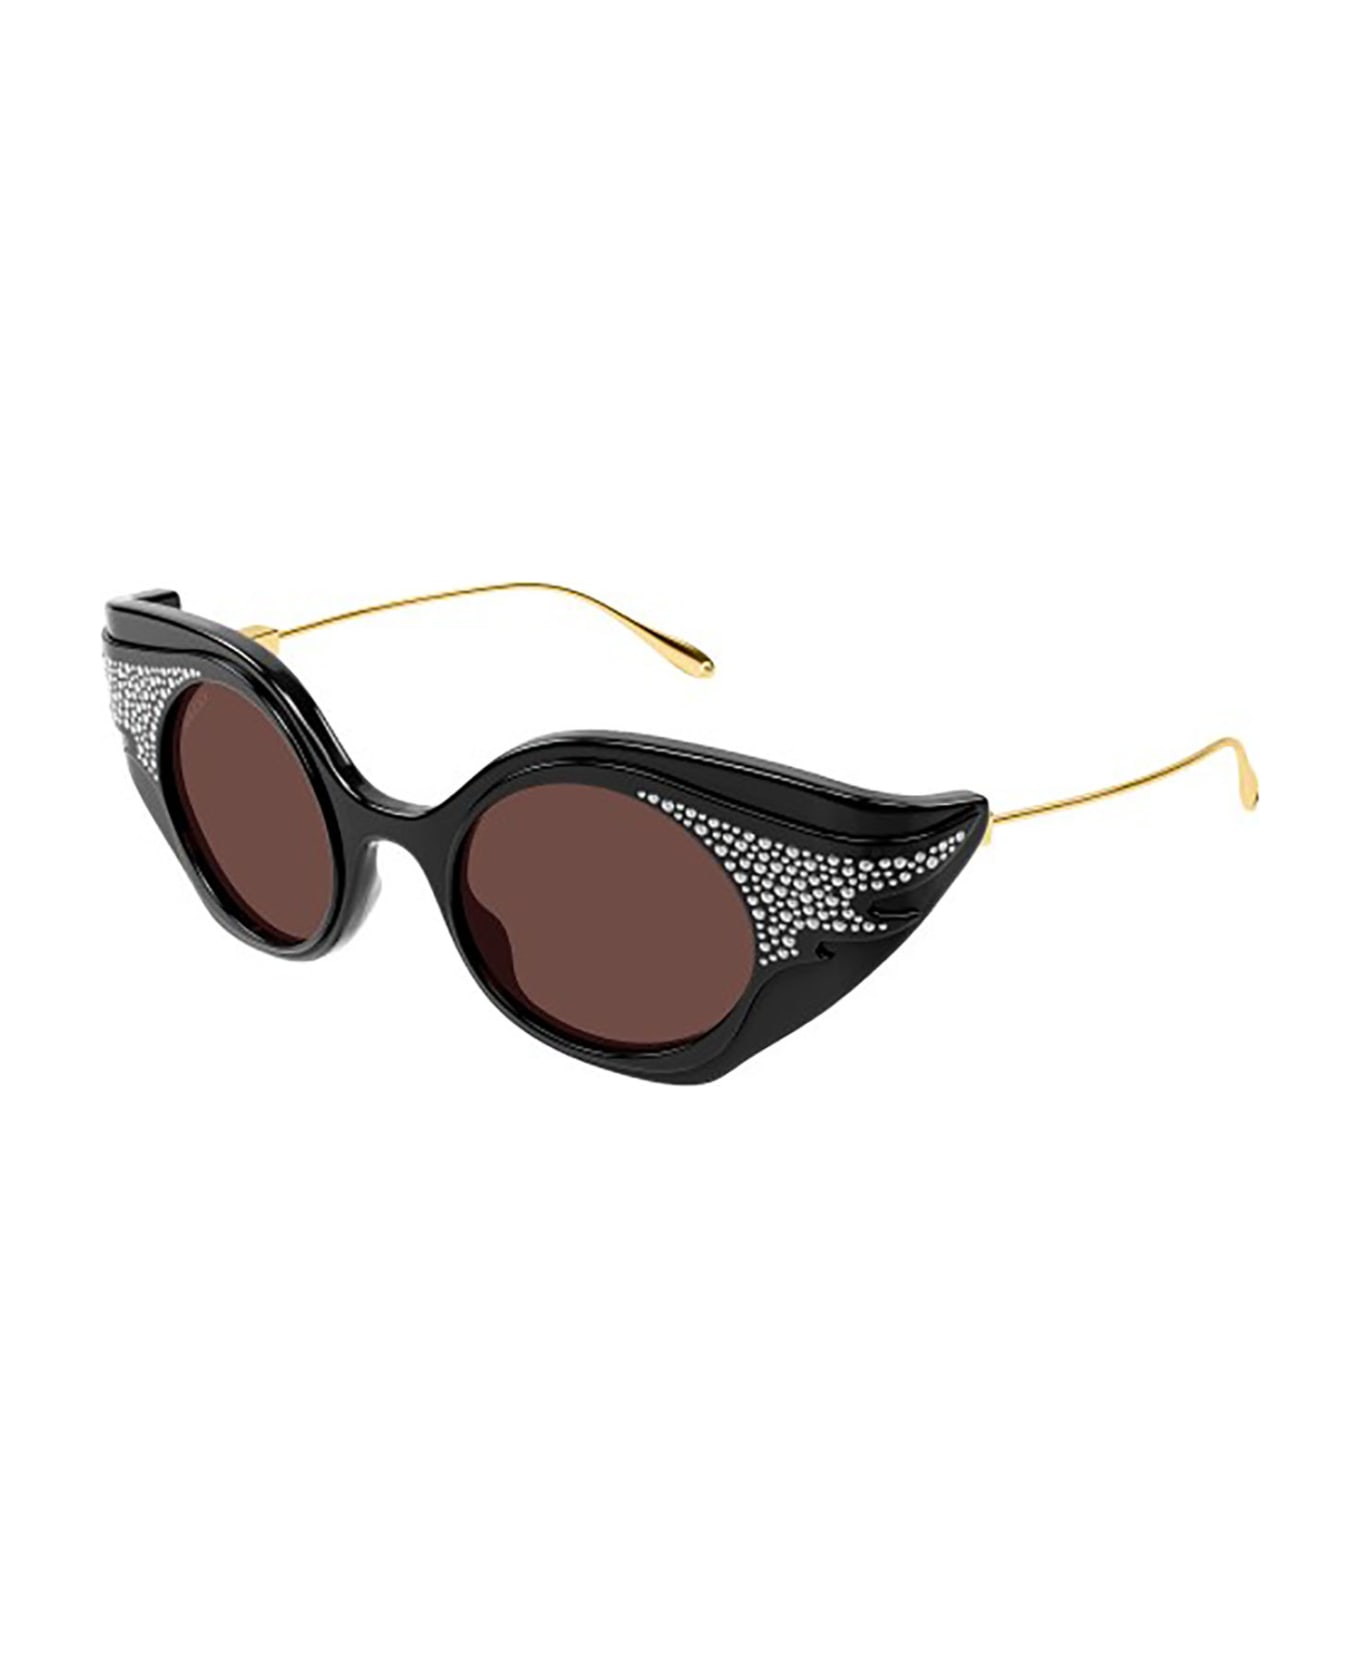 Gucci Eyewear Gg1327s Sunglasses - 001 black gold brown